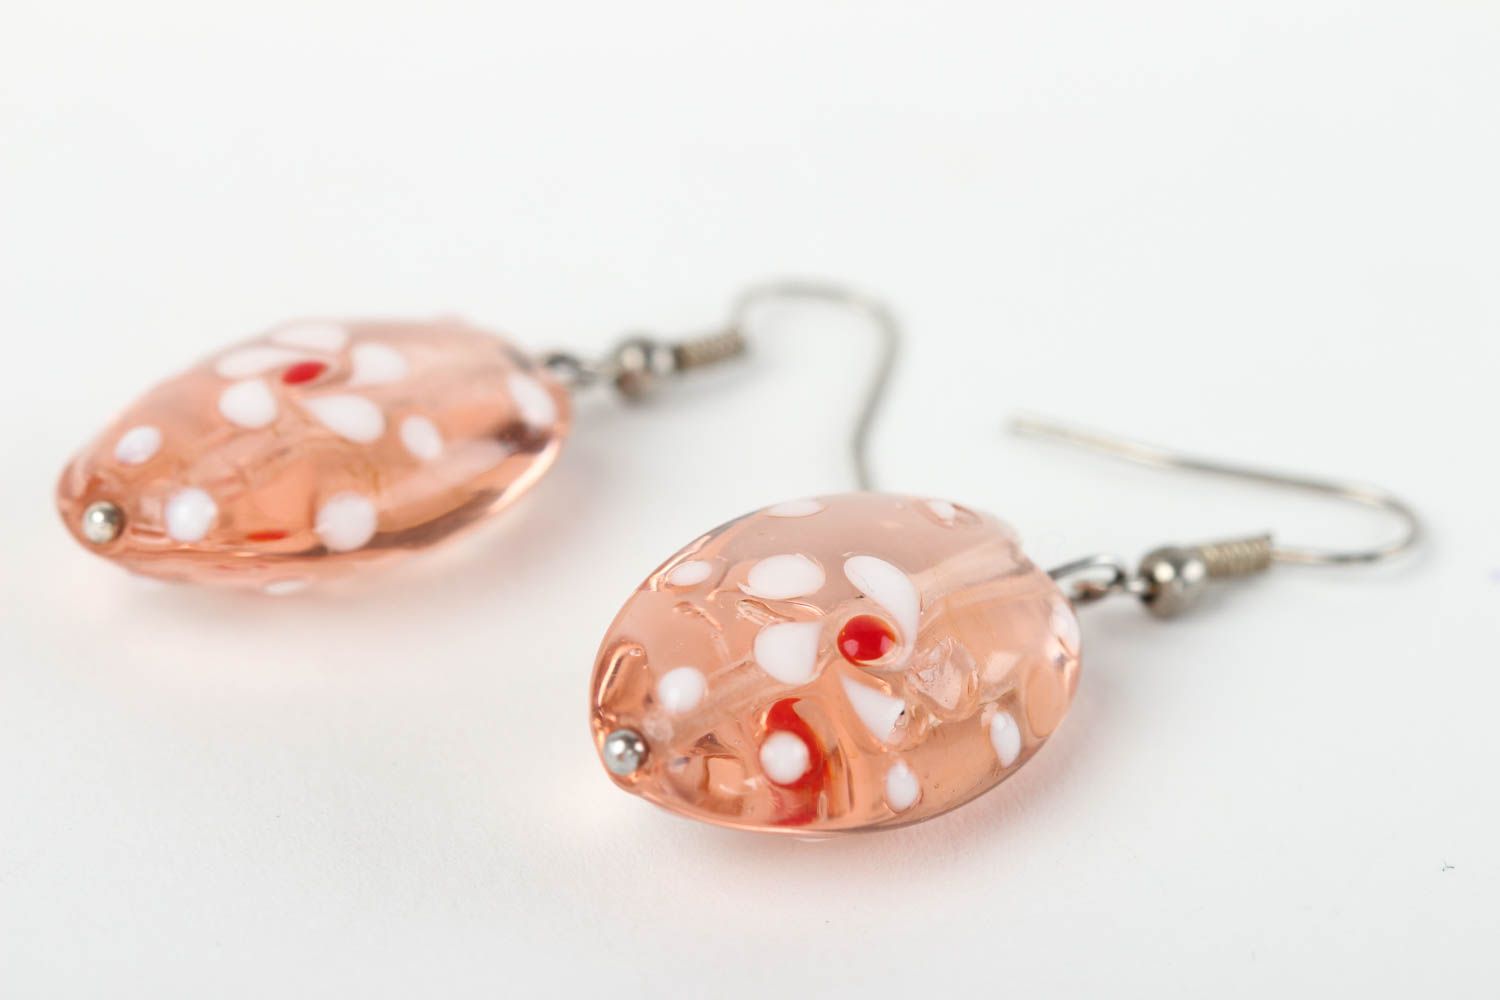 Unusual handmade glass earrings glass art artisan jewelry designs gift ideas photo 3